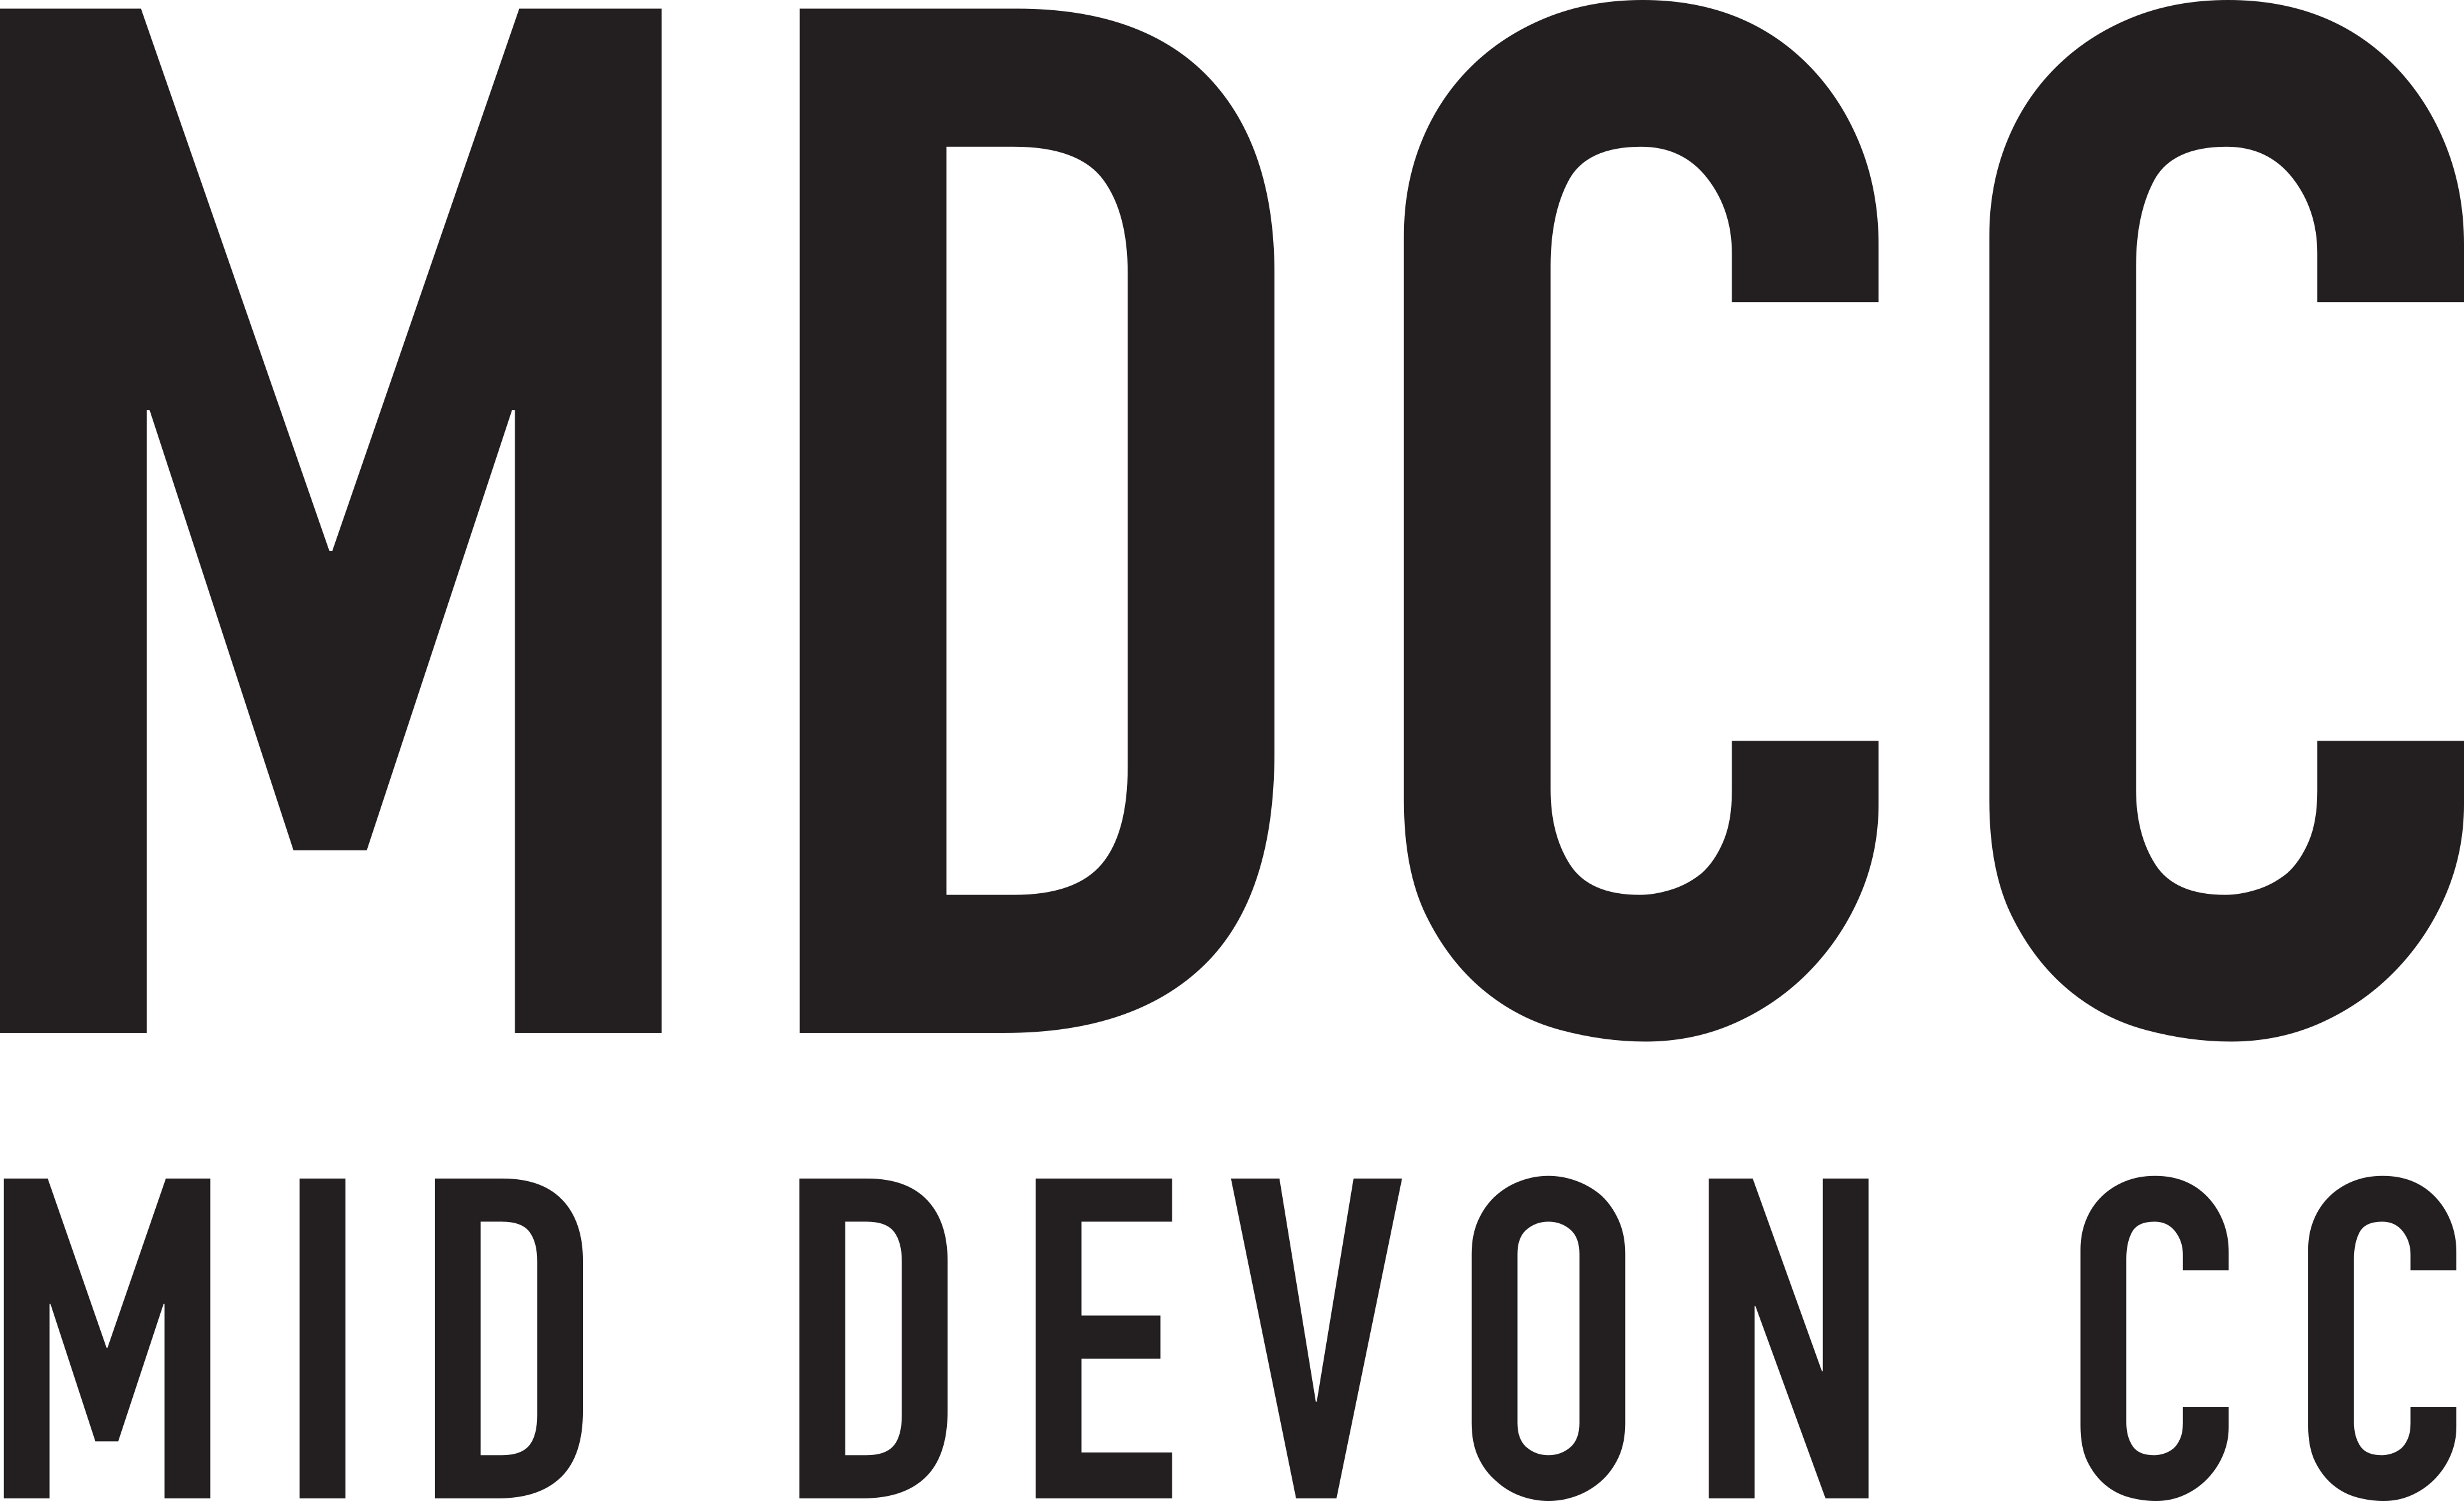 Mid Devon CC